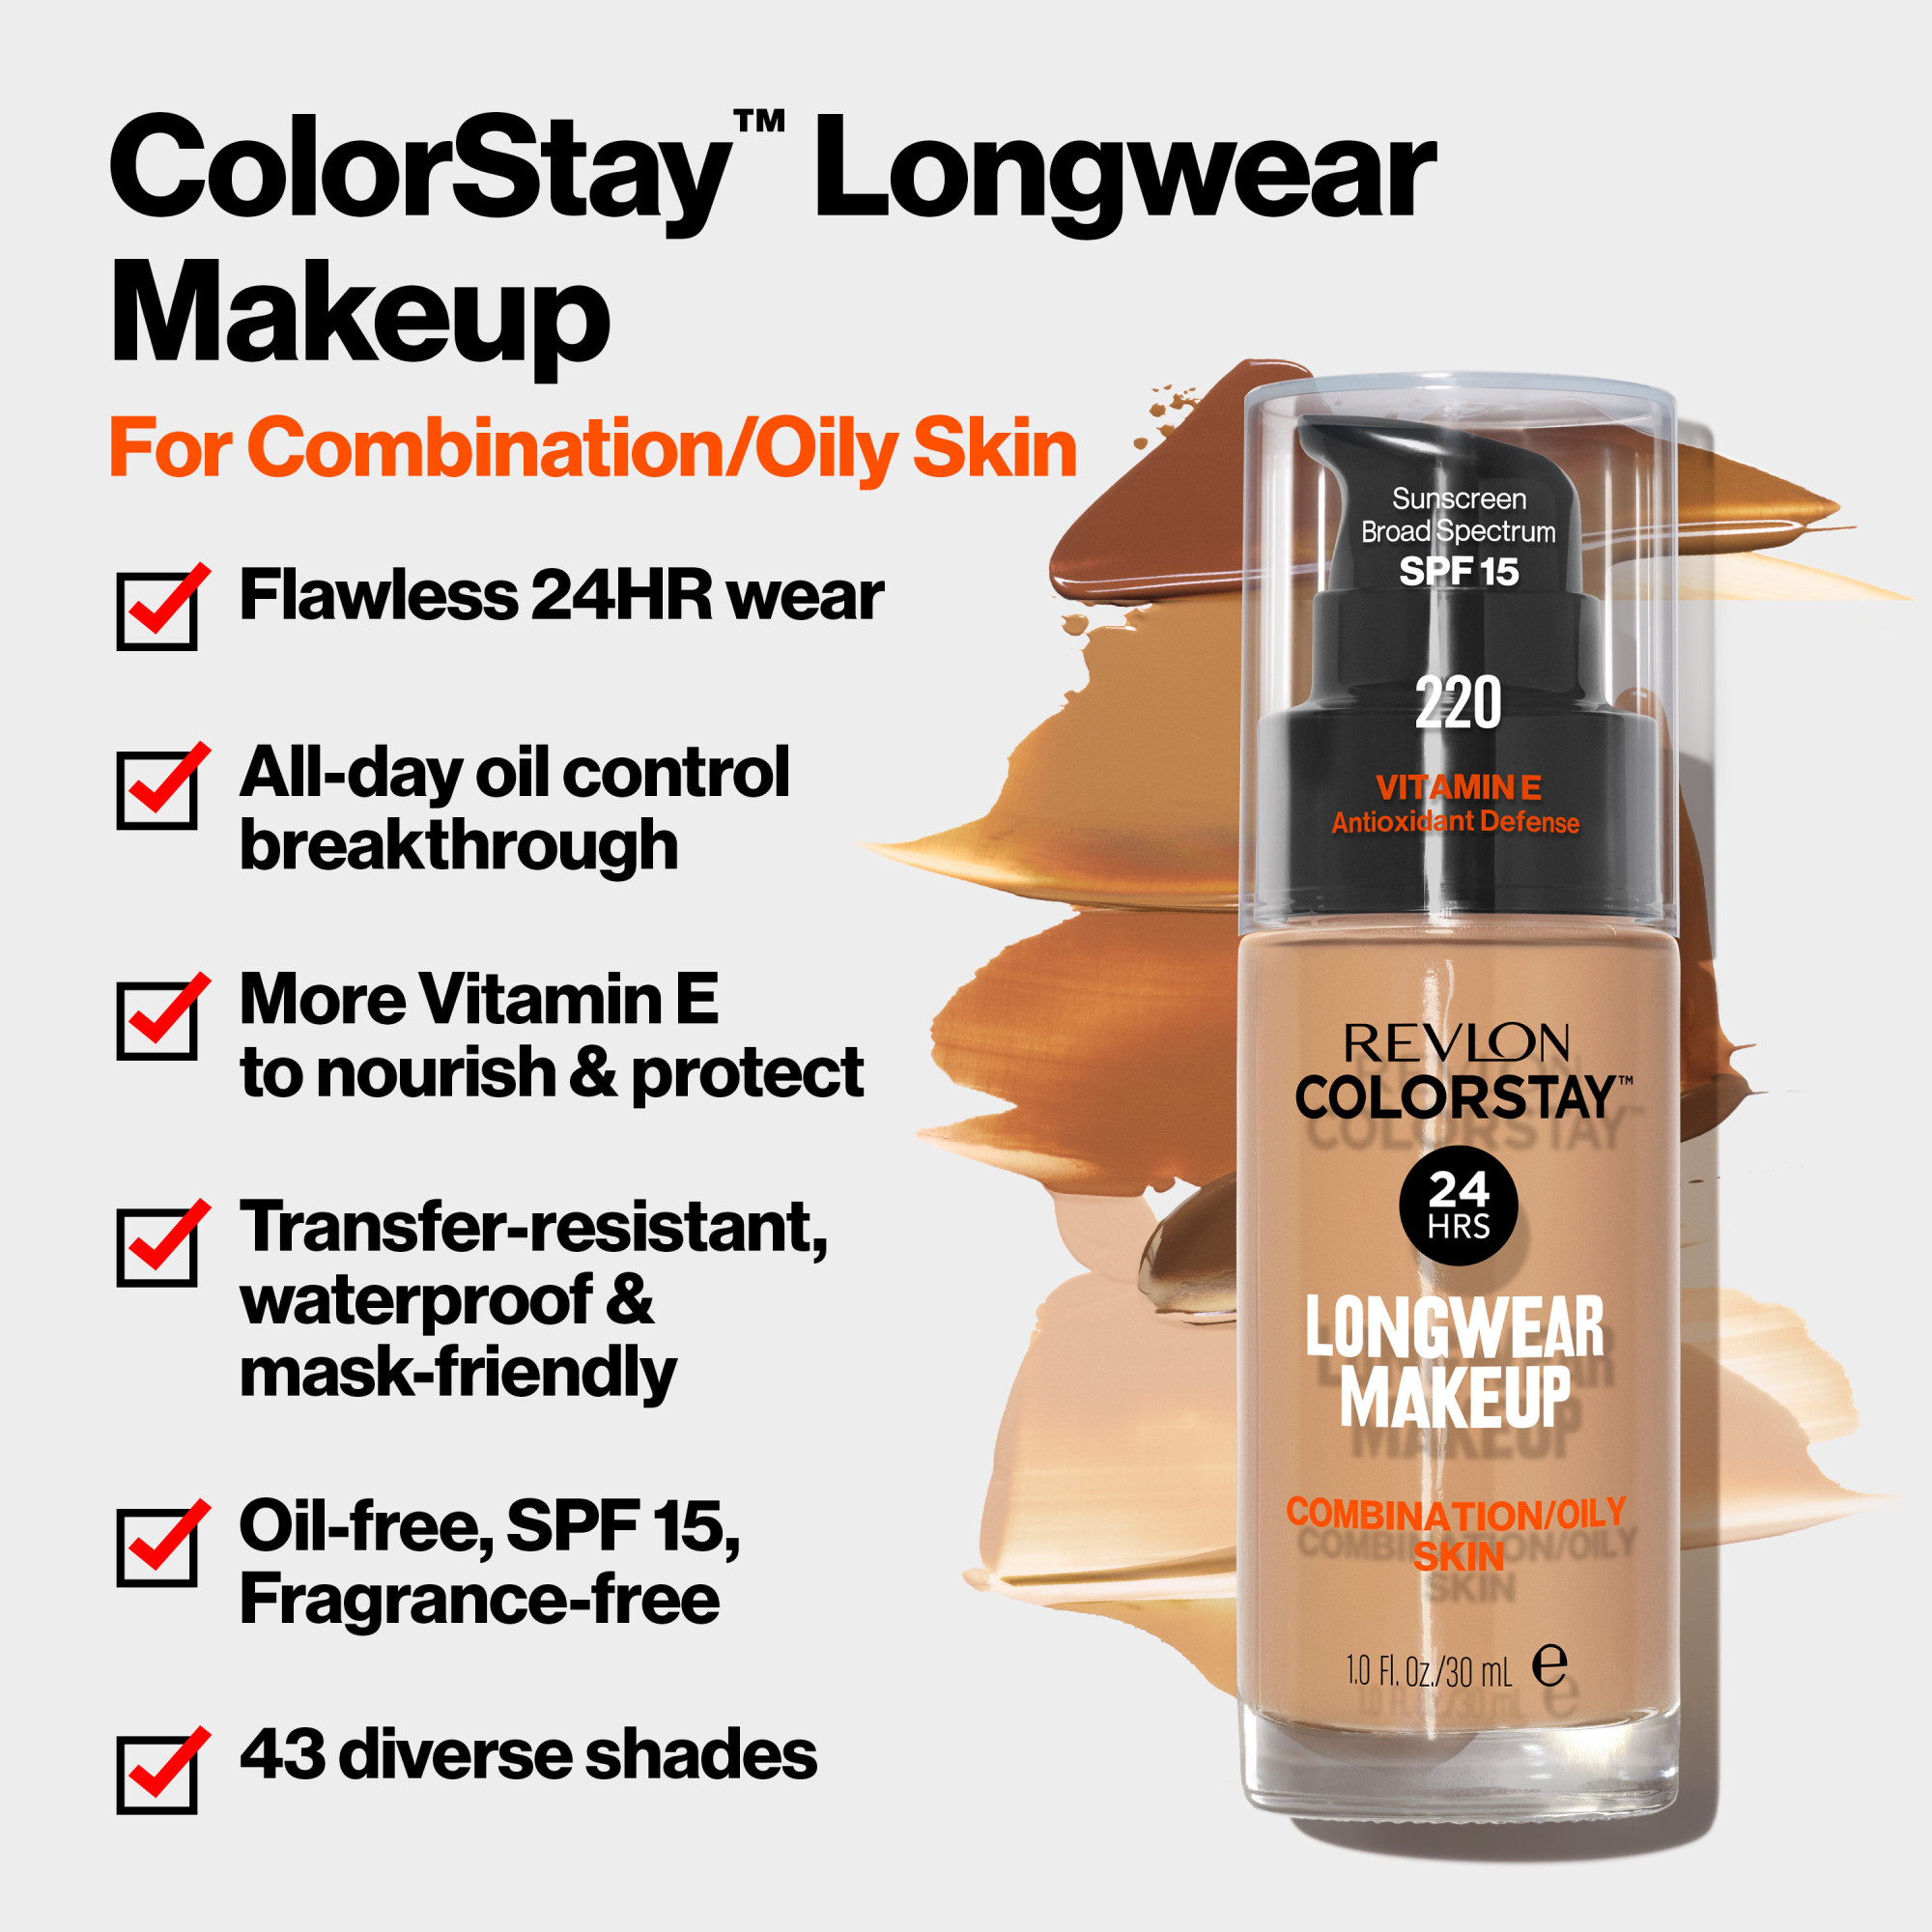 Revlon ColorStay Liquid Foundation Makeup, Matte Finish, Combination/Oily Skin, SPF 15, 320 True Beige, 1 fl oz. - image 5 of 11